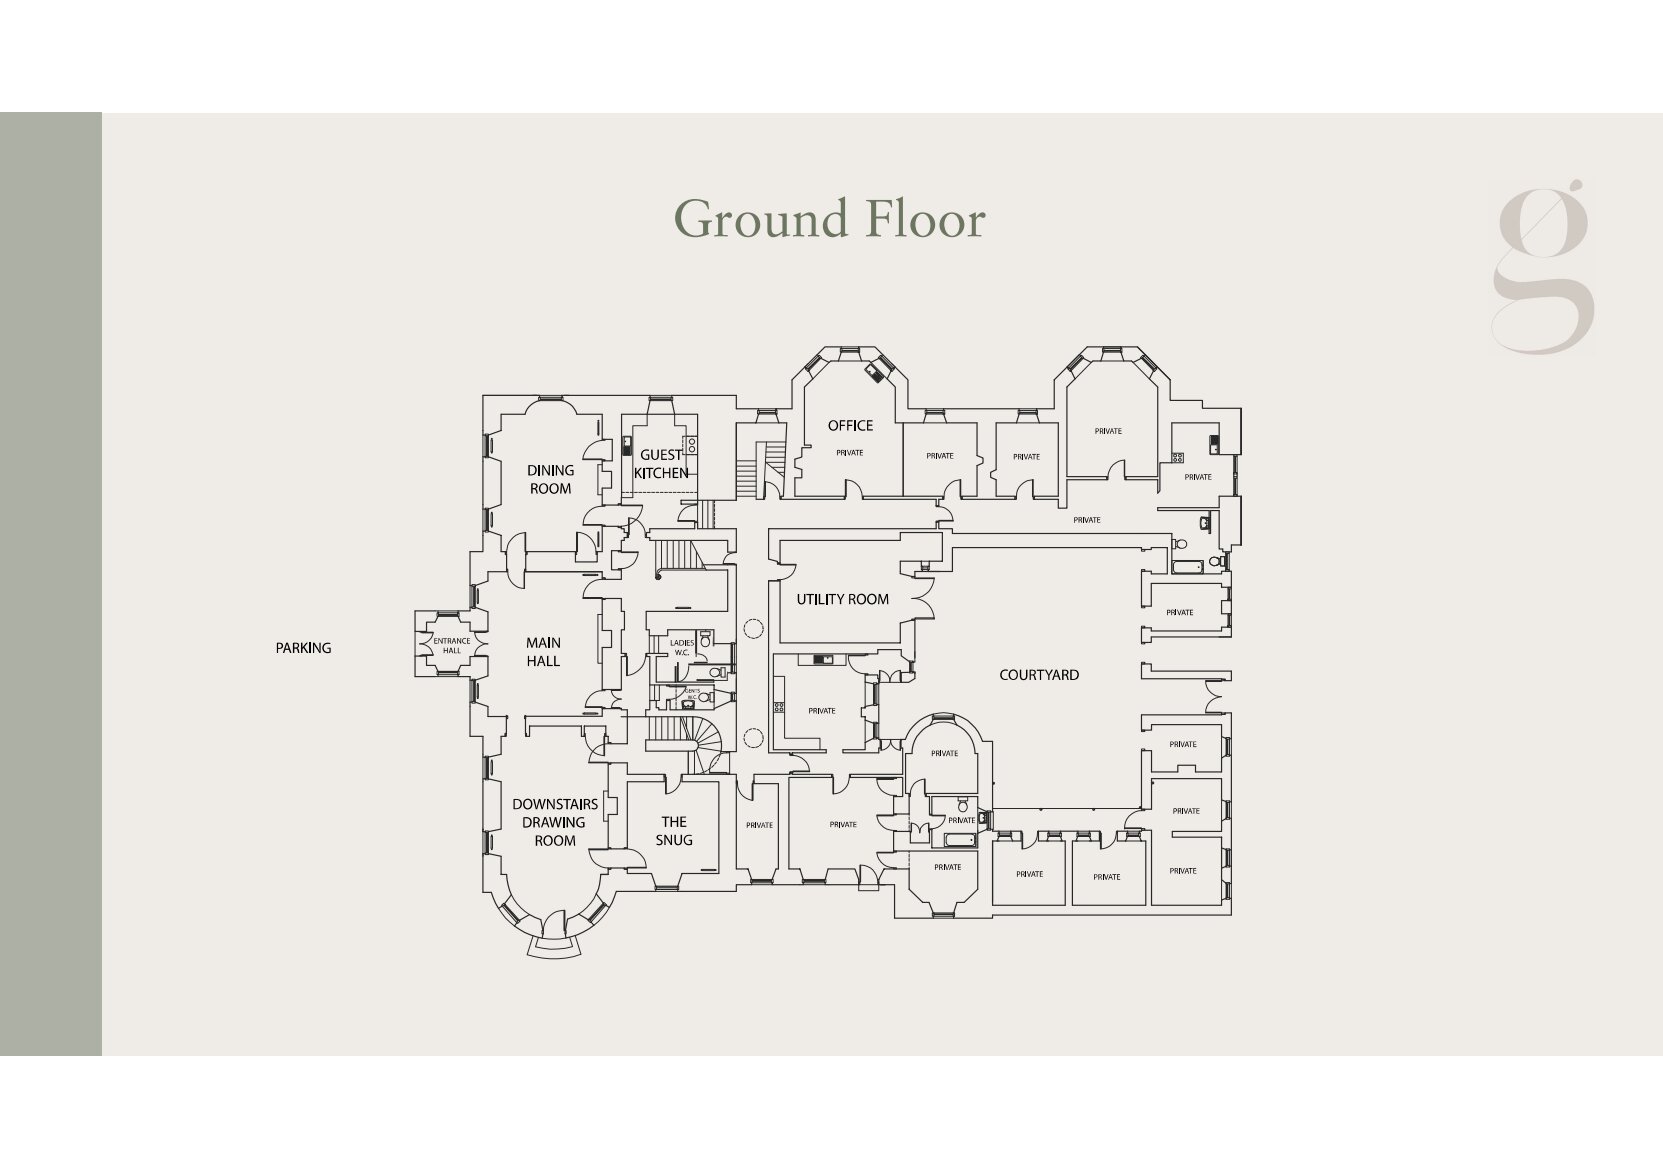 Screenshot (18) - Ground floor plan